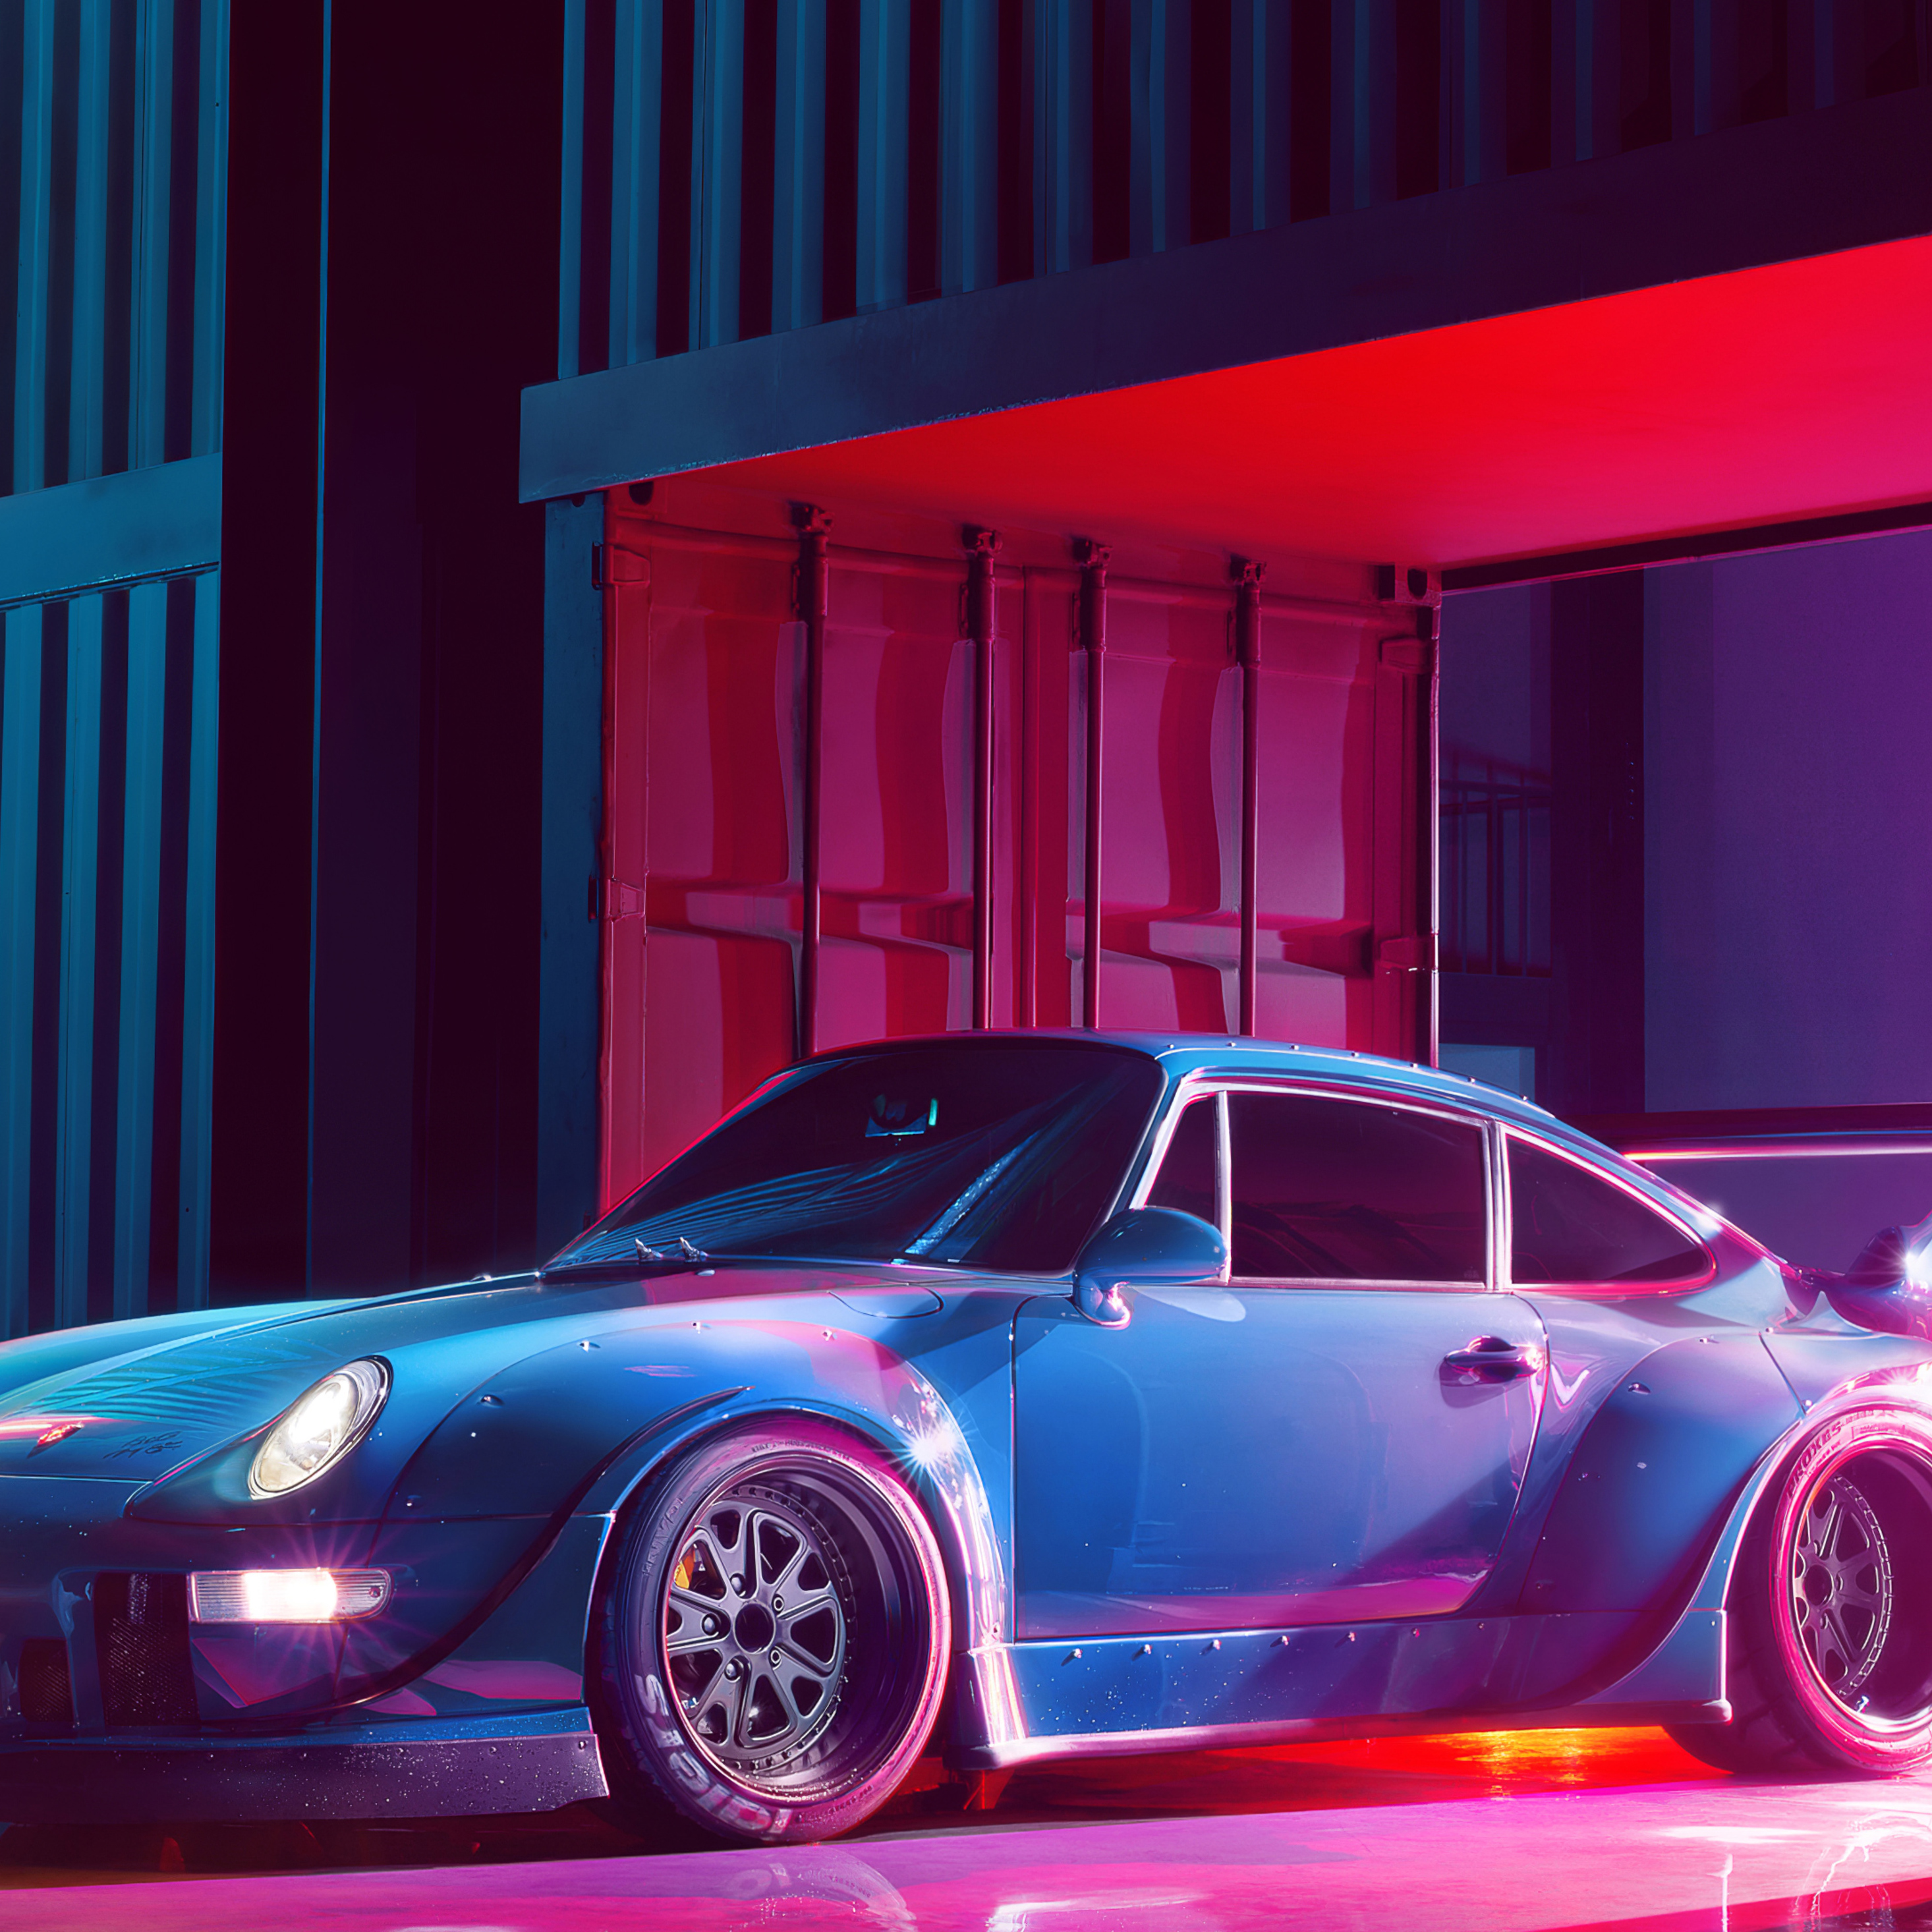 2932x2932 Porsche Rwb Concept 4k Ipad Pro Retina Display Hd 4k Wallpapers Images Backgrounds Photos And Pictures